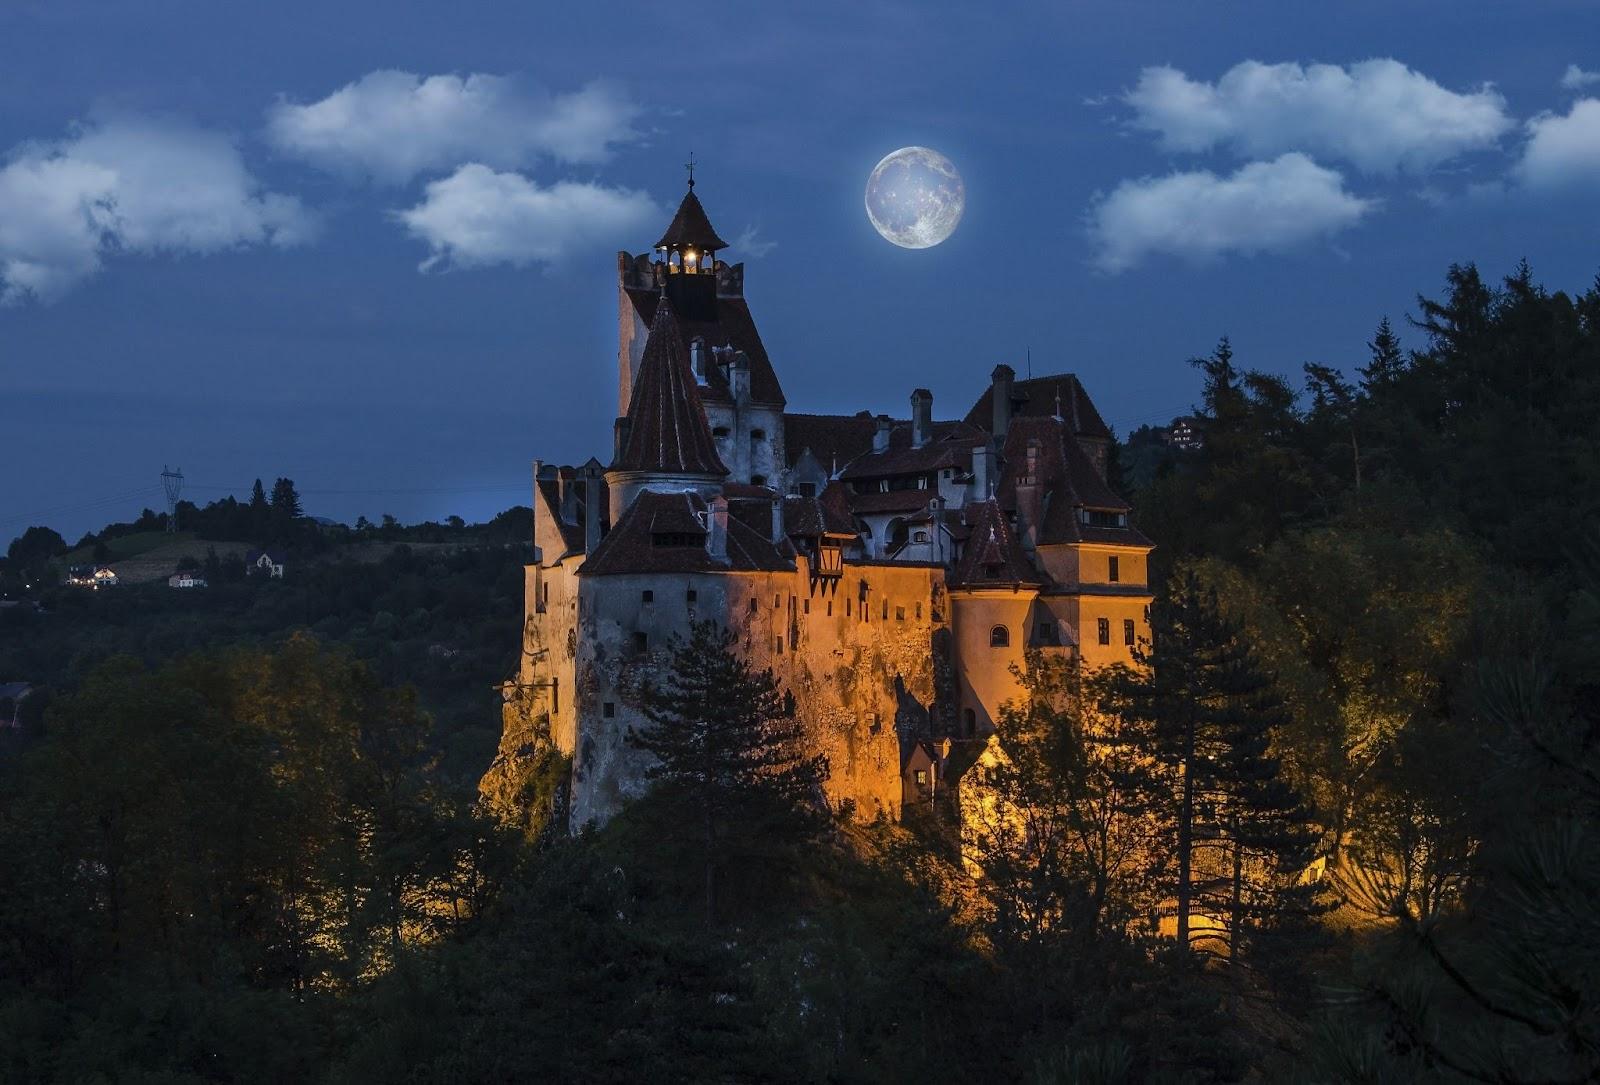 Dracula's medieval castle at night with full moon - Bran , Transylvania. Romania.
